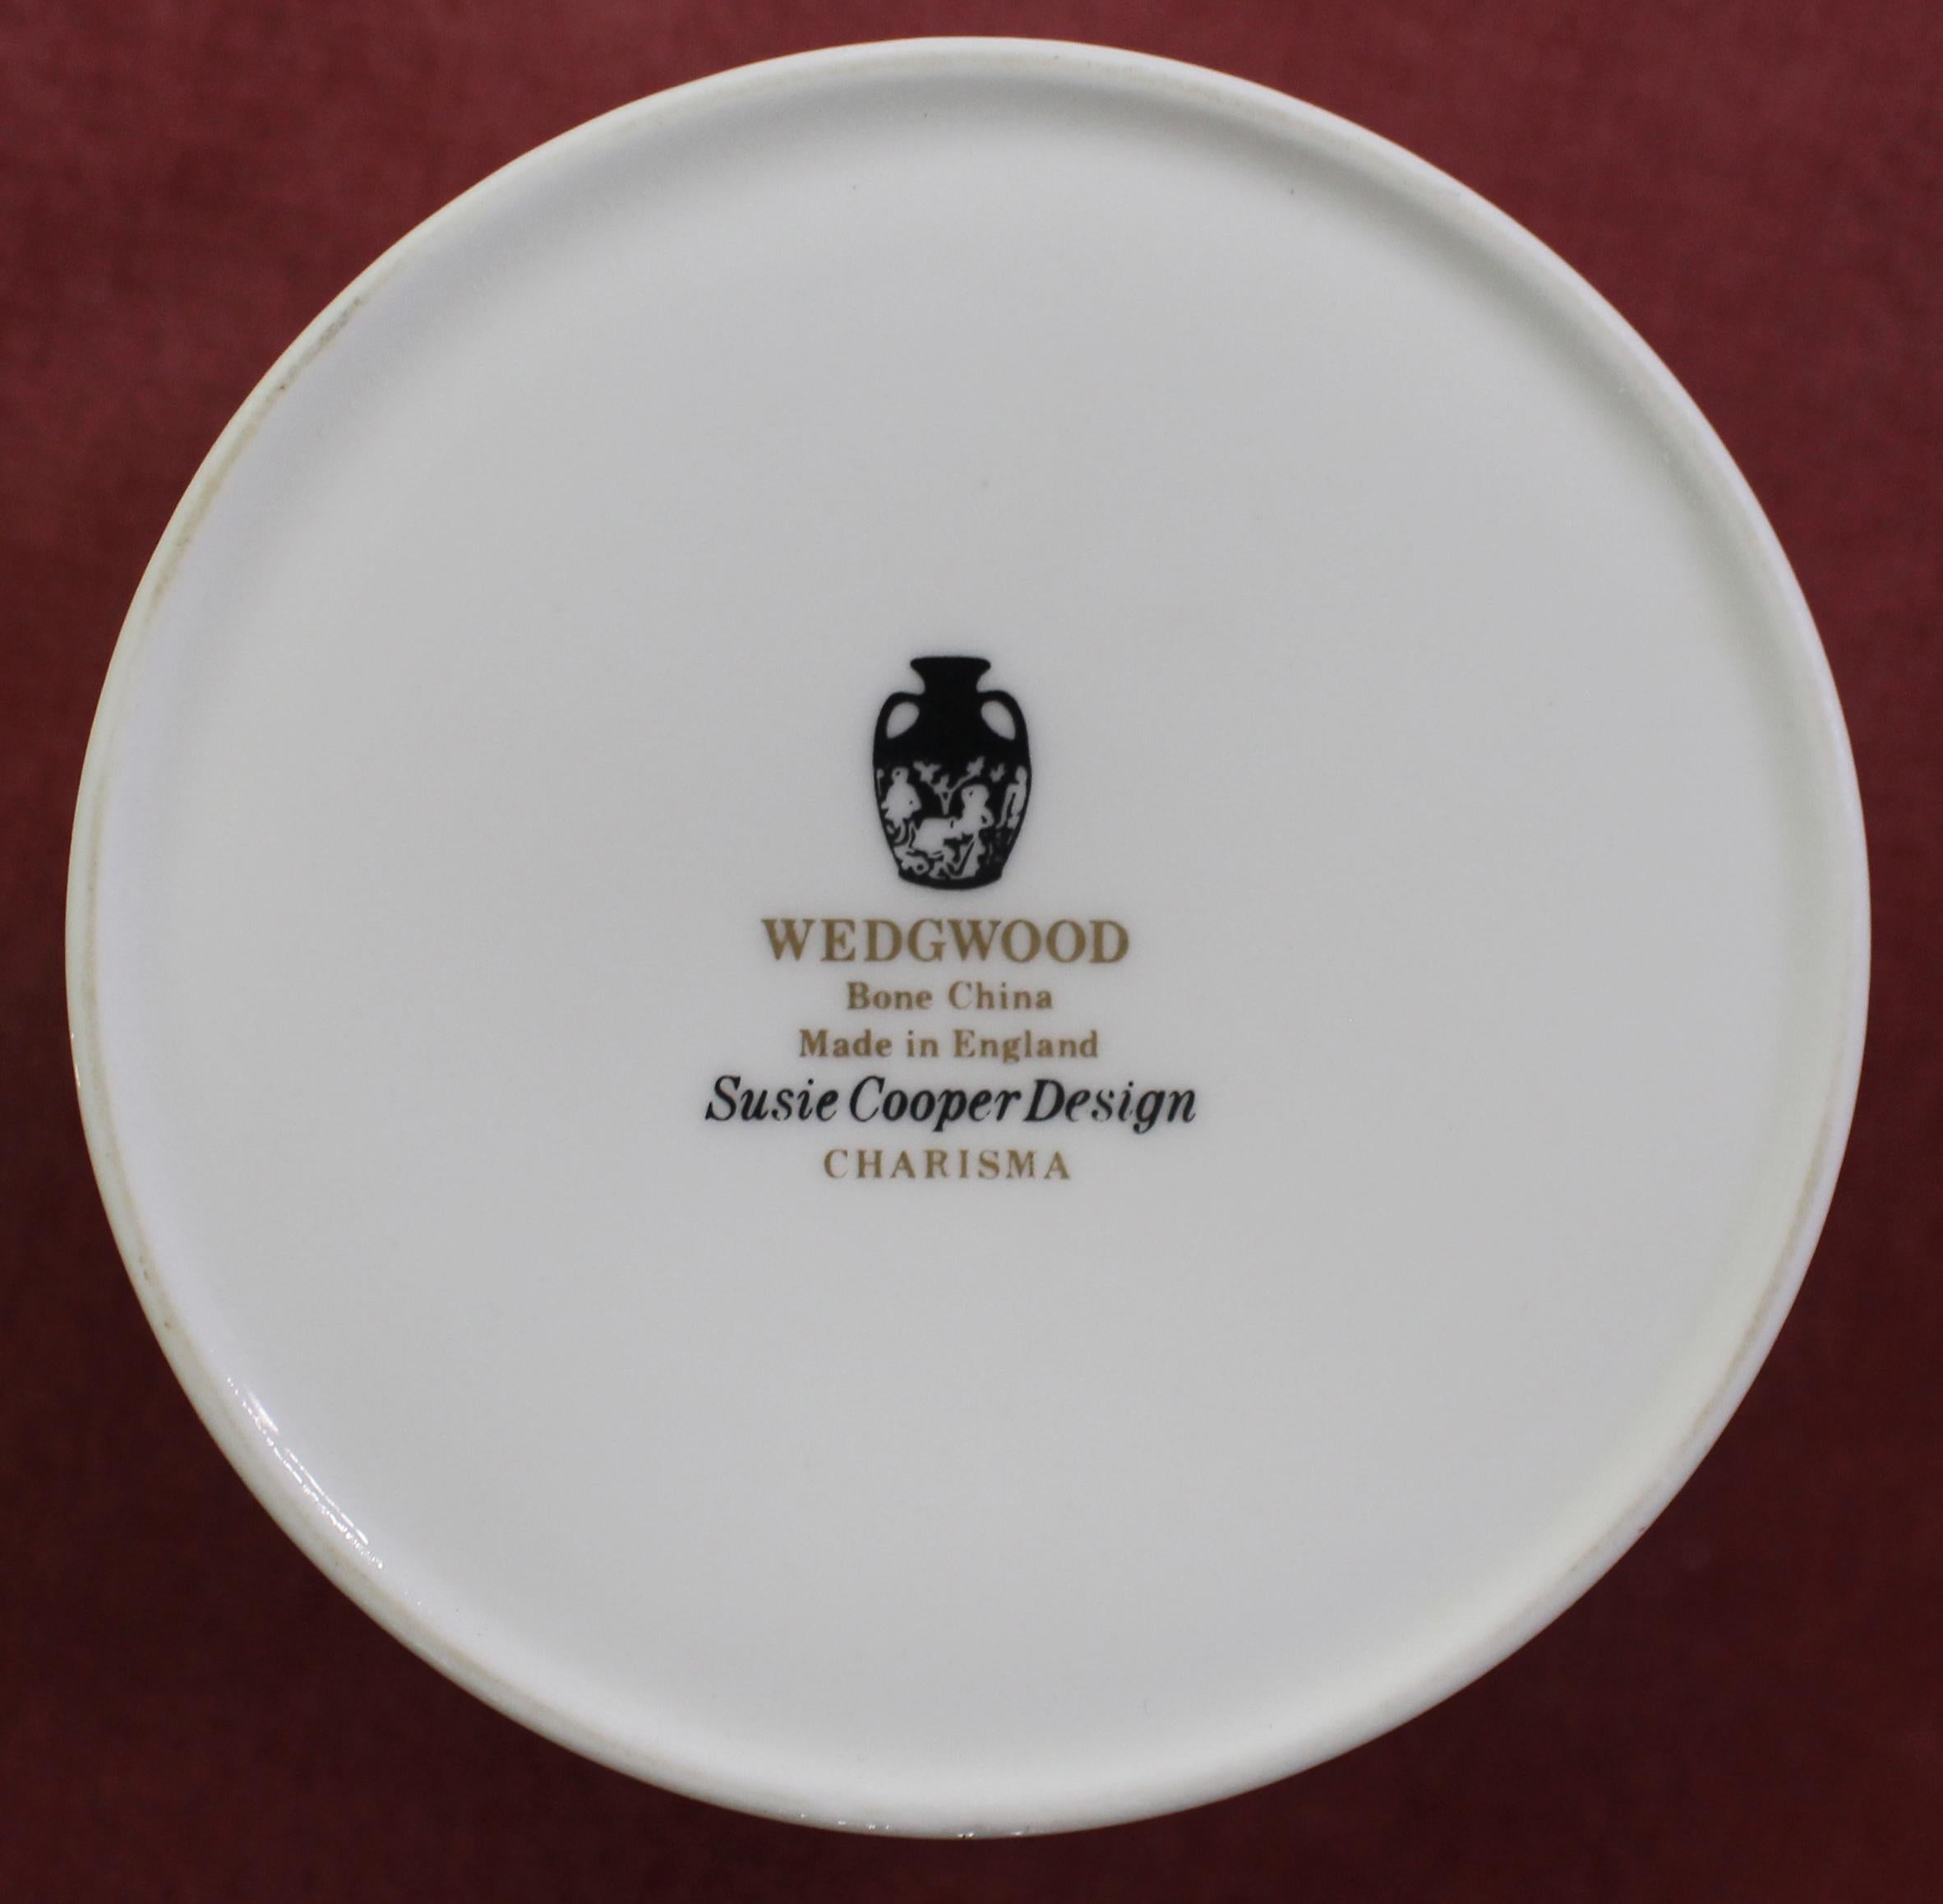 wedgwood bone china susie cooper design